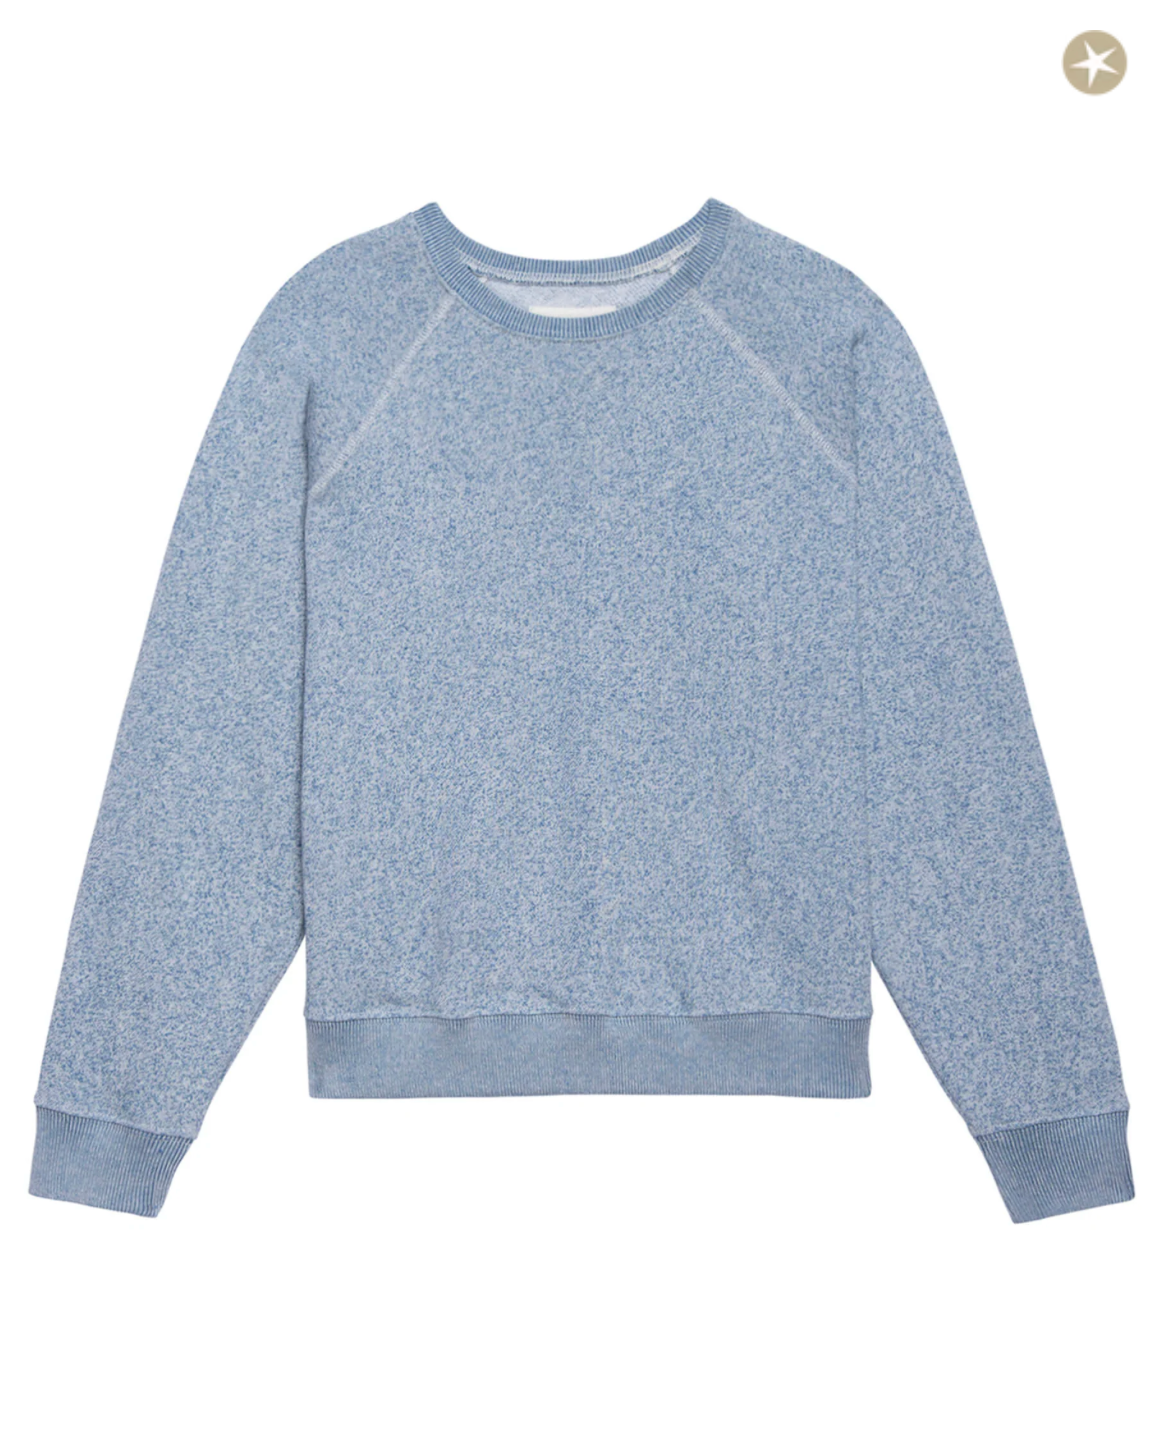 The Shrunken Sweatshirt. Heathered Coastline Blue